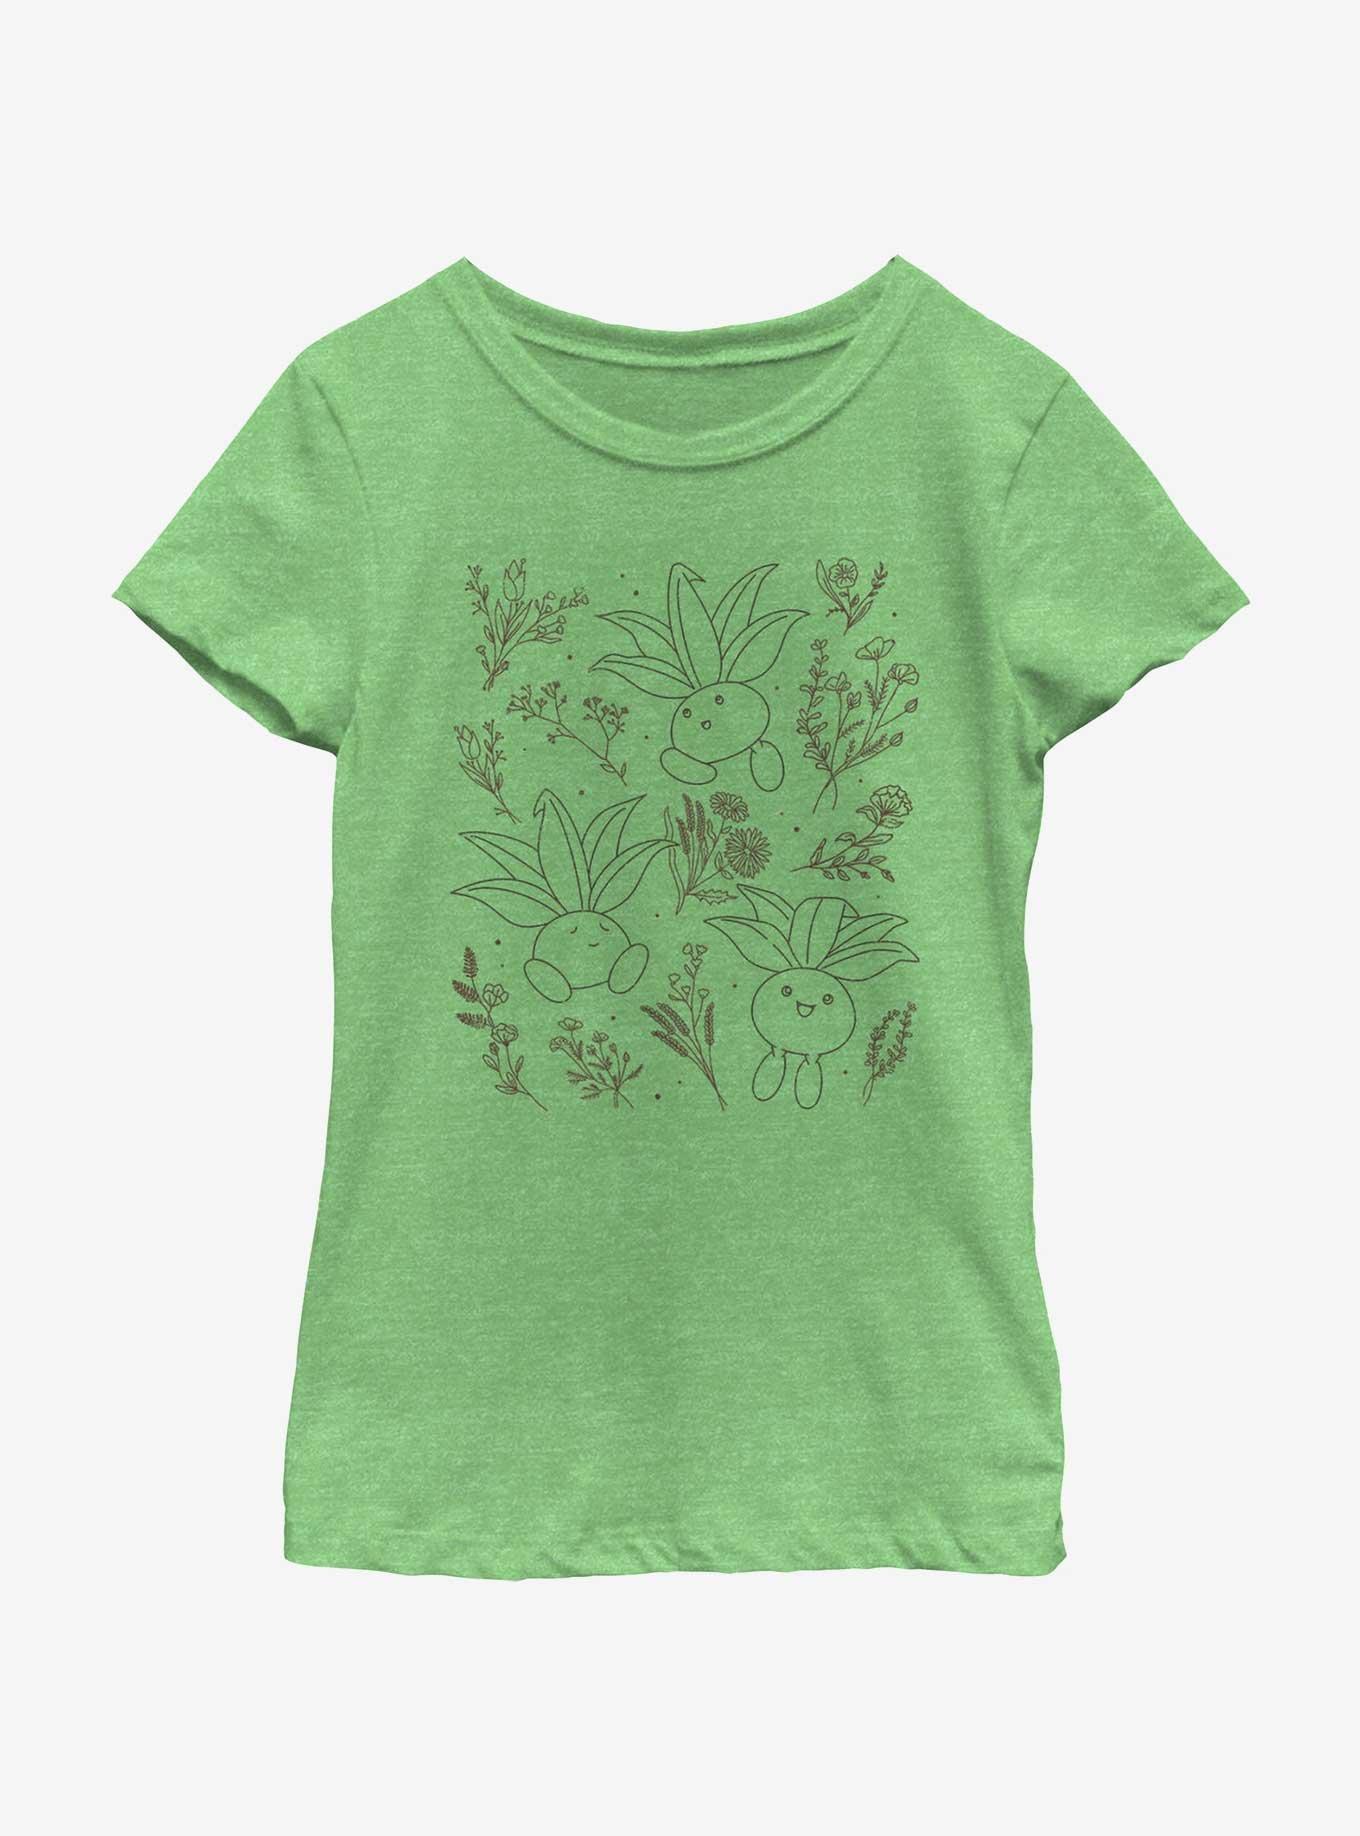 Pokemon Oddish Forest Flowers Youth Girls T-Shirt, , hi-res